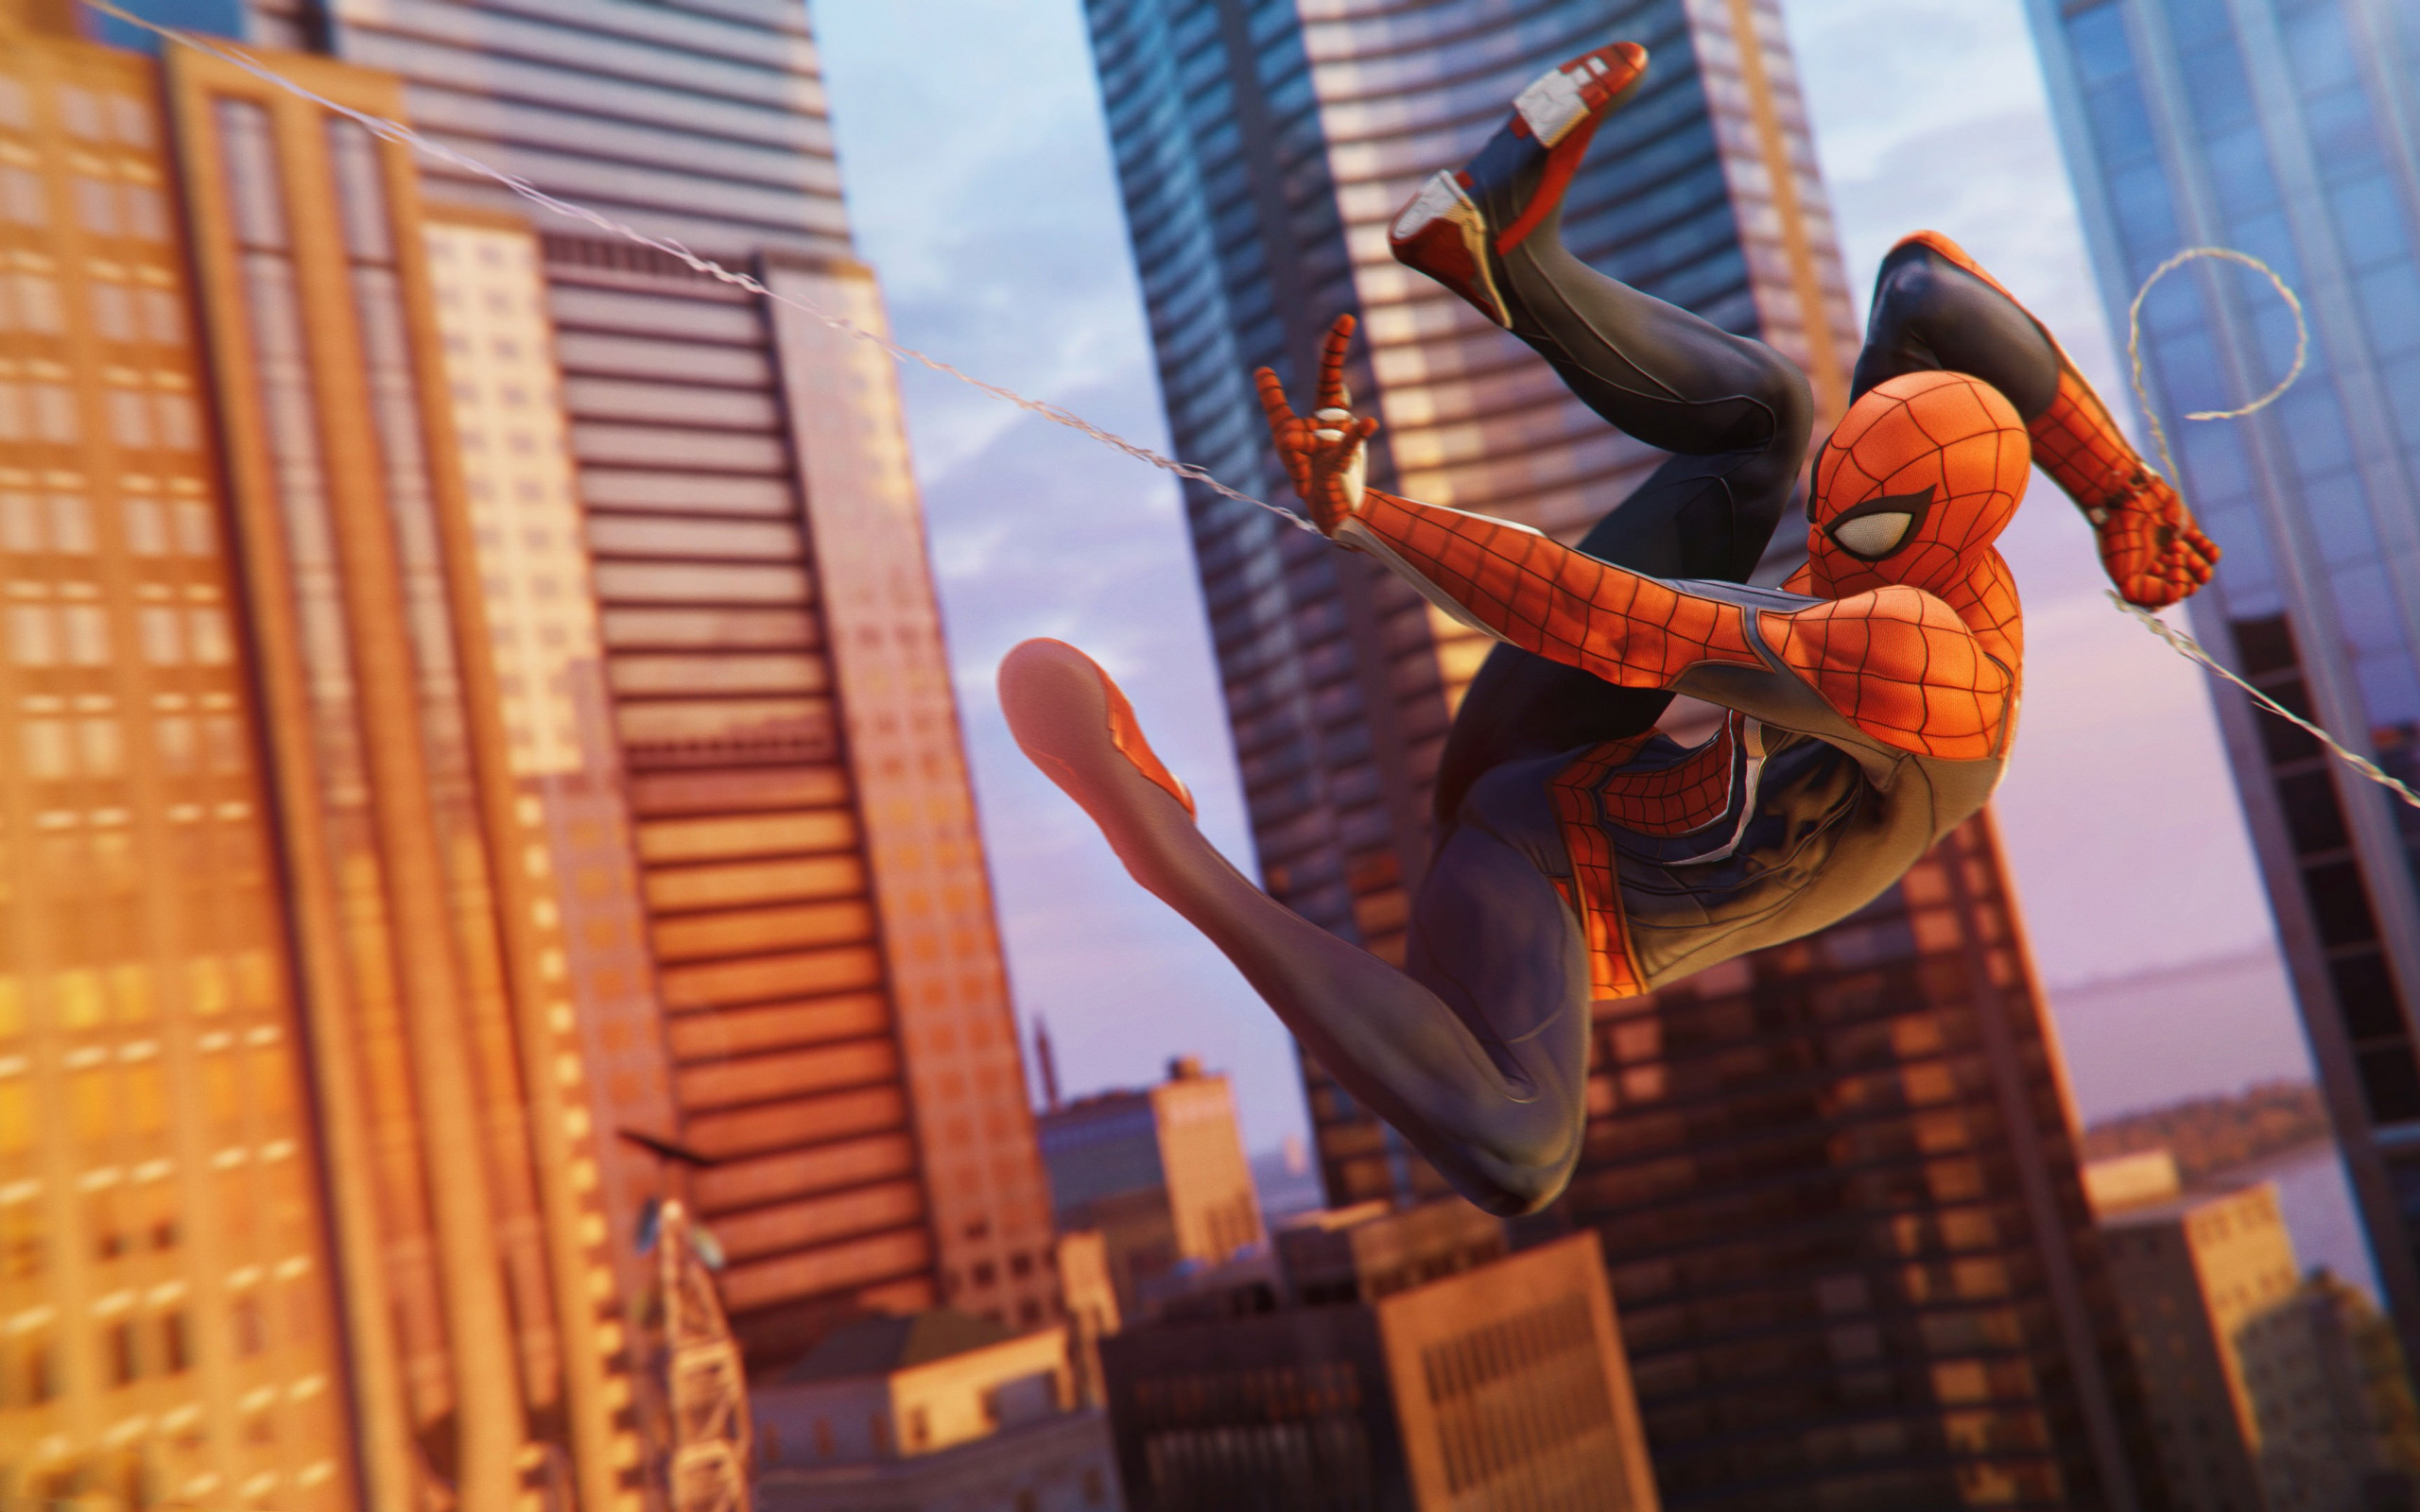 Spider Man 2018 Poster wallpaper 2560x1600